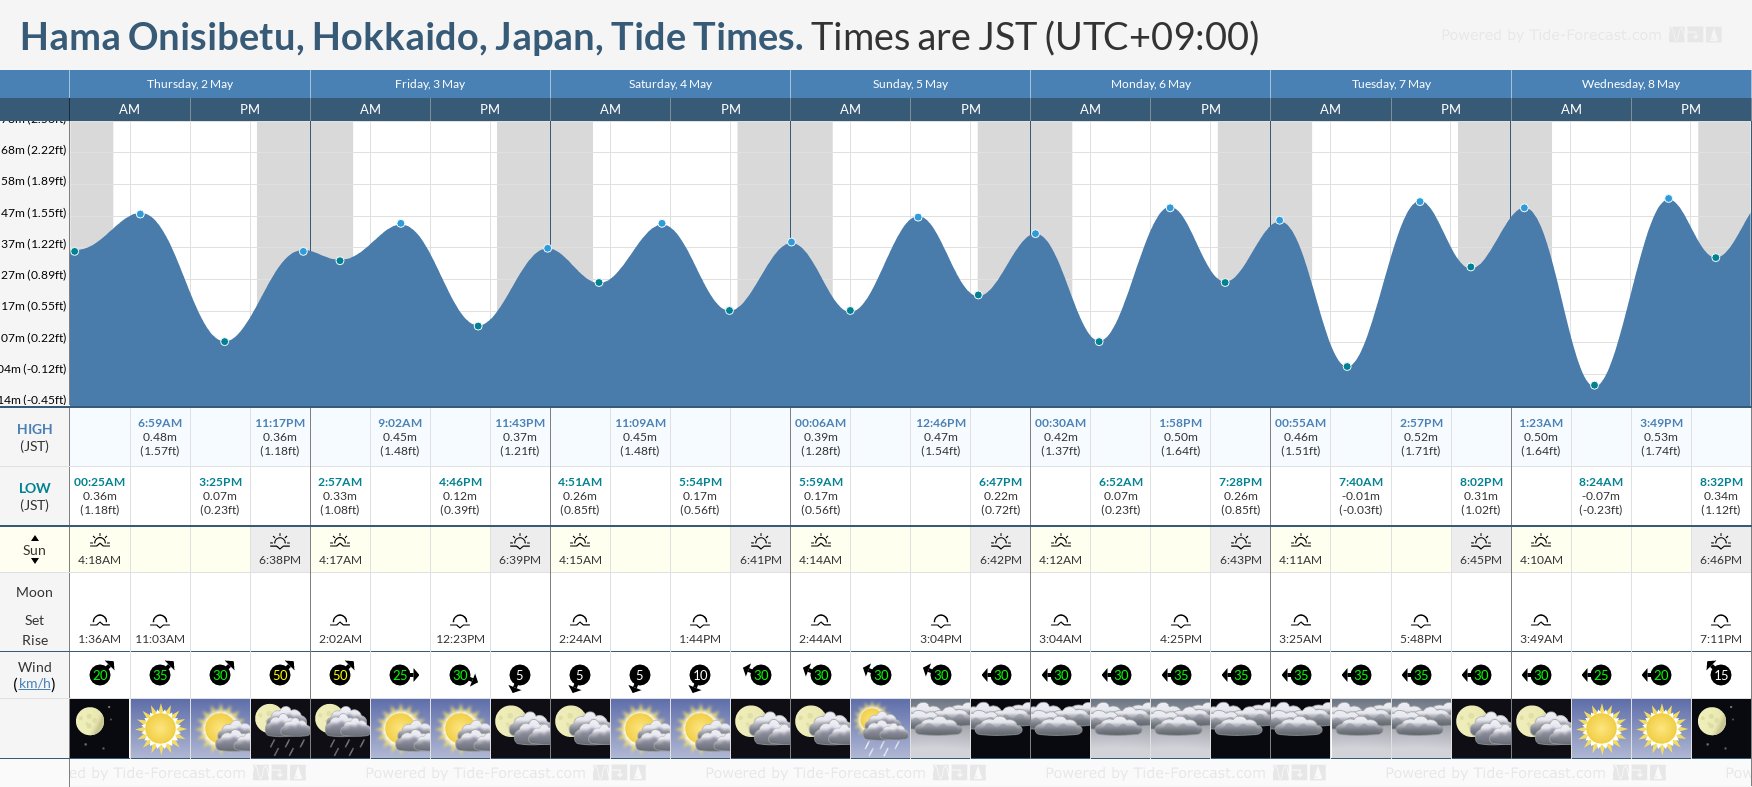 Hama Onisibetu, Hokkaido, Japan Tide Chart including high and low tide times for the next 7 days